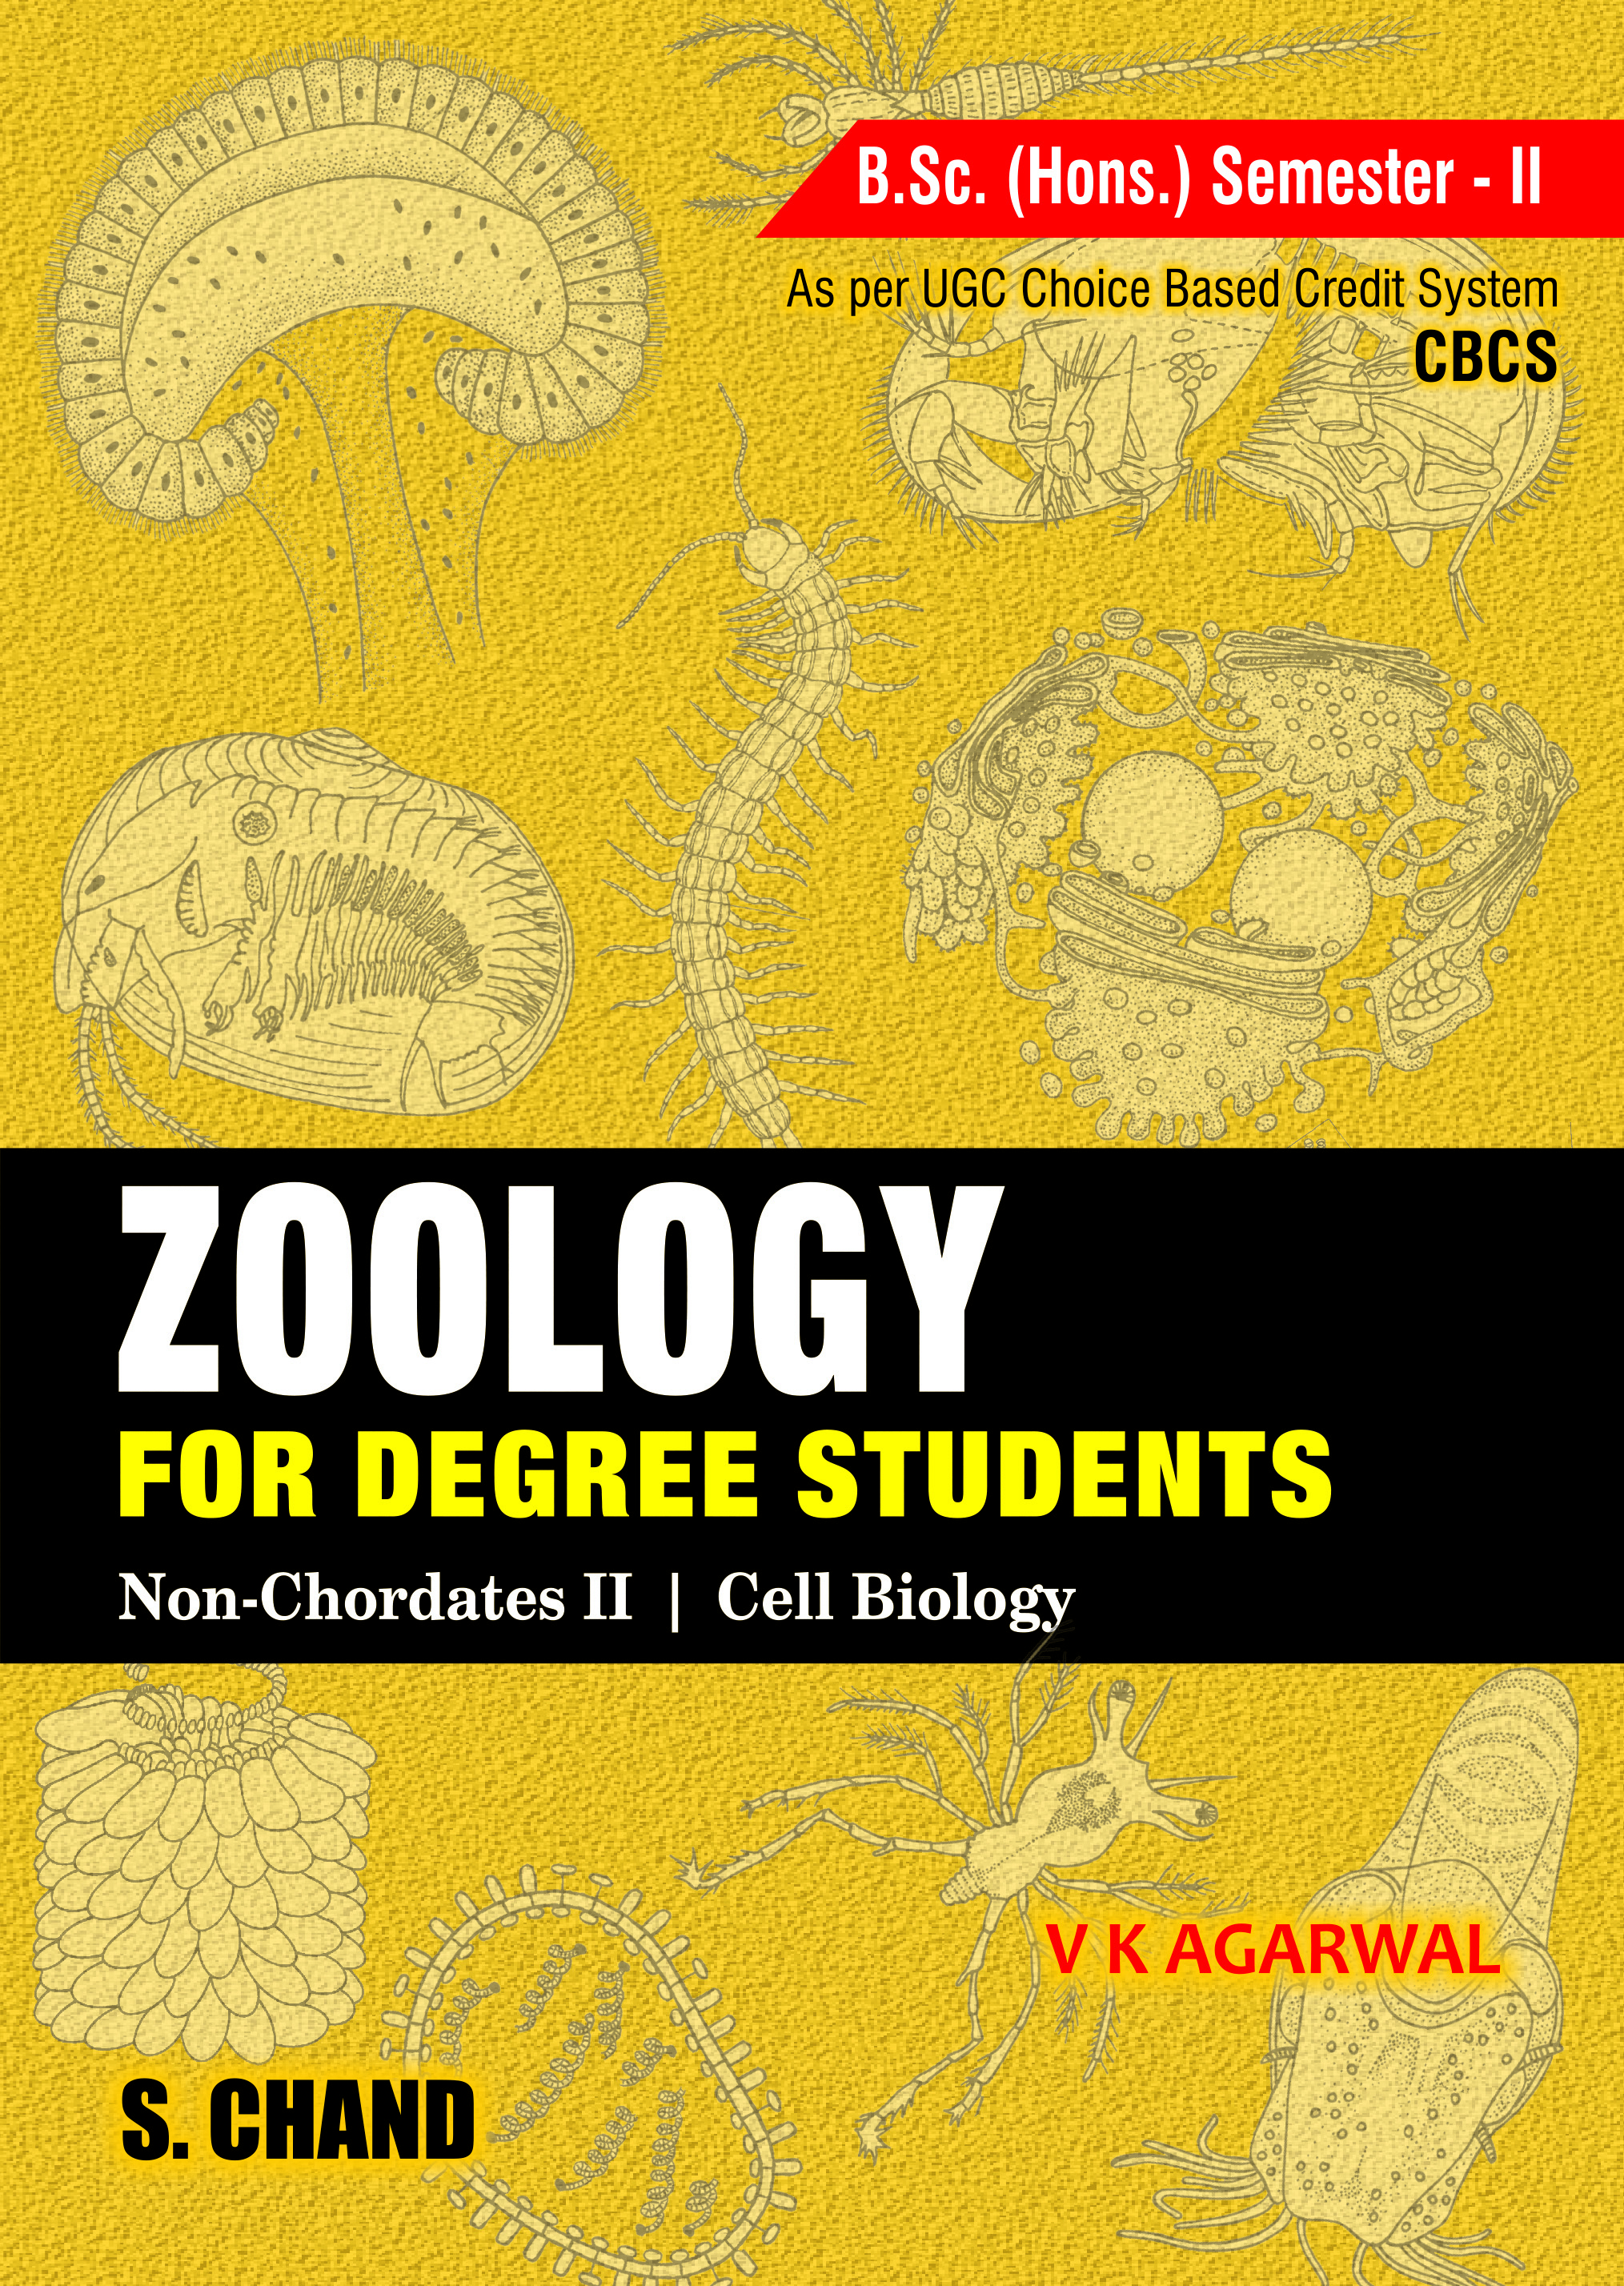 Zoology for Degree Students (B.Sc. Hons.) Sem.-II, As per CBCS